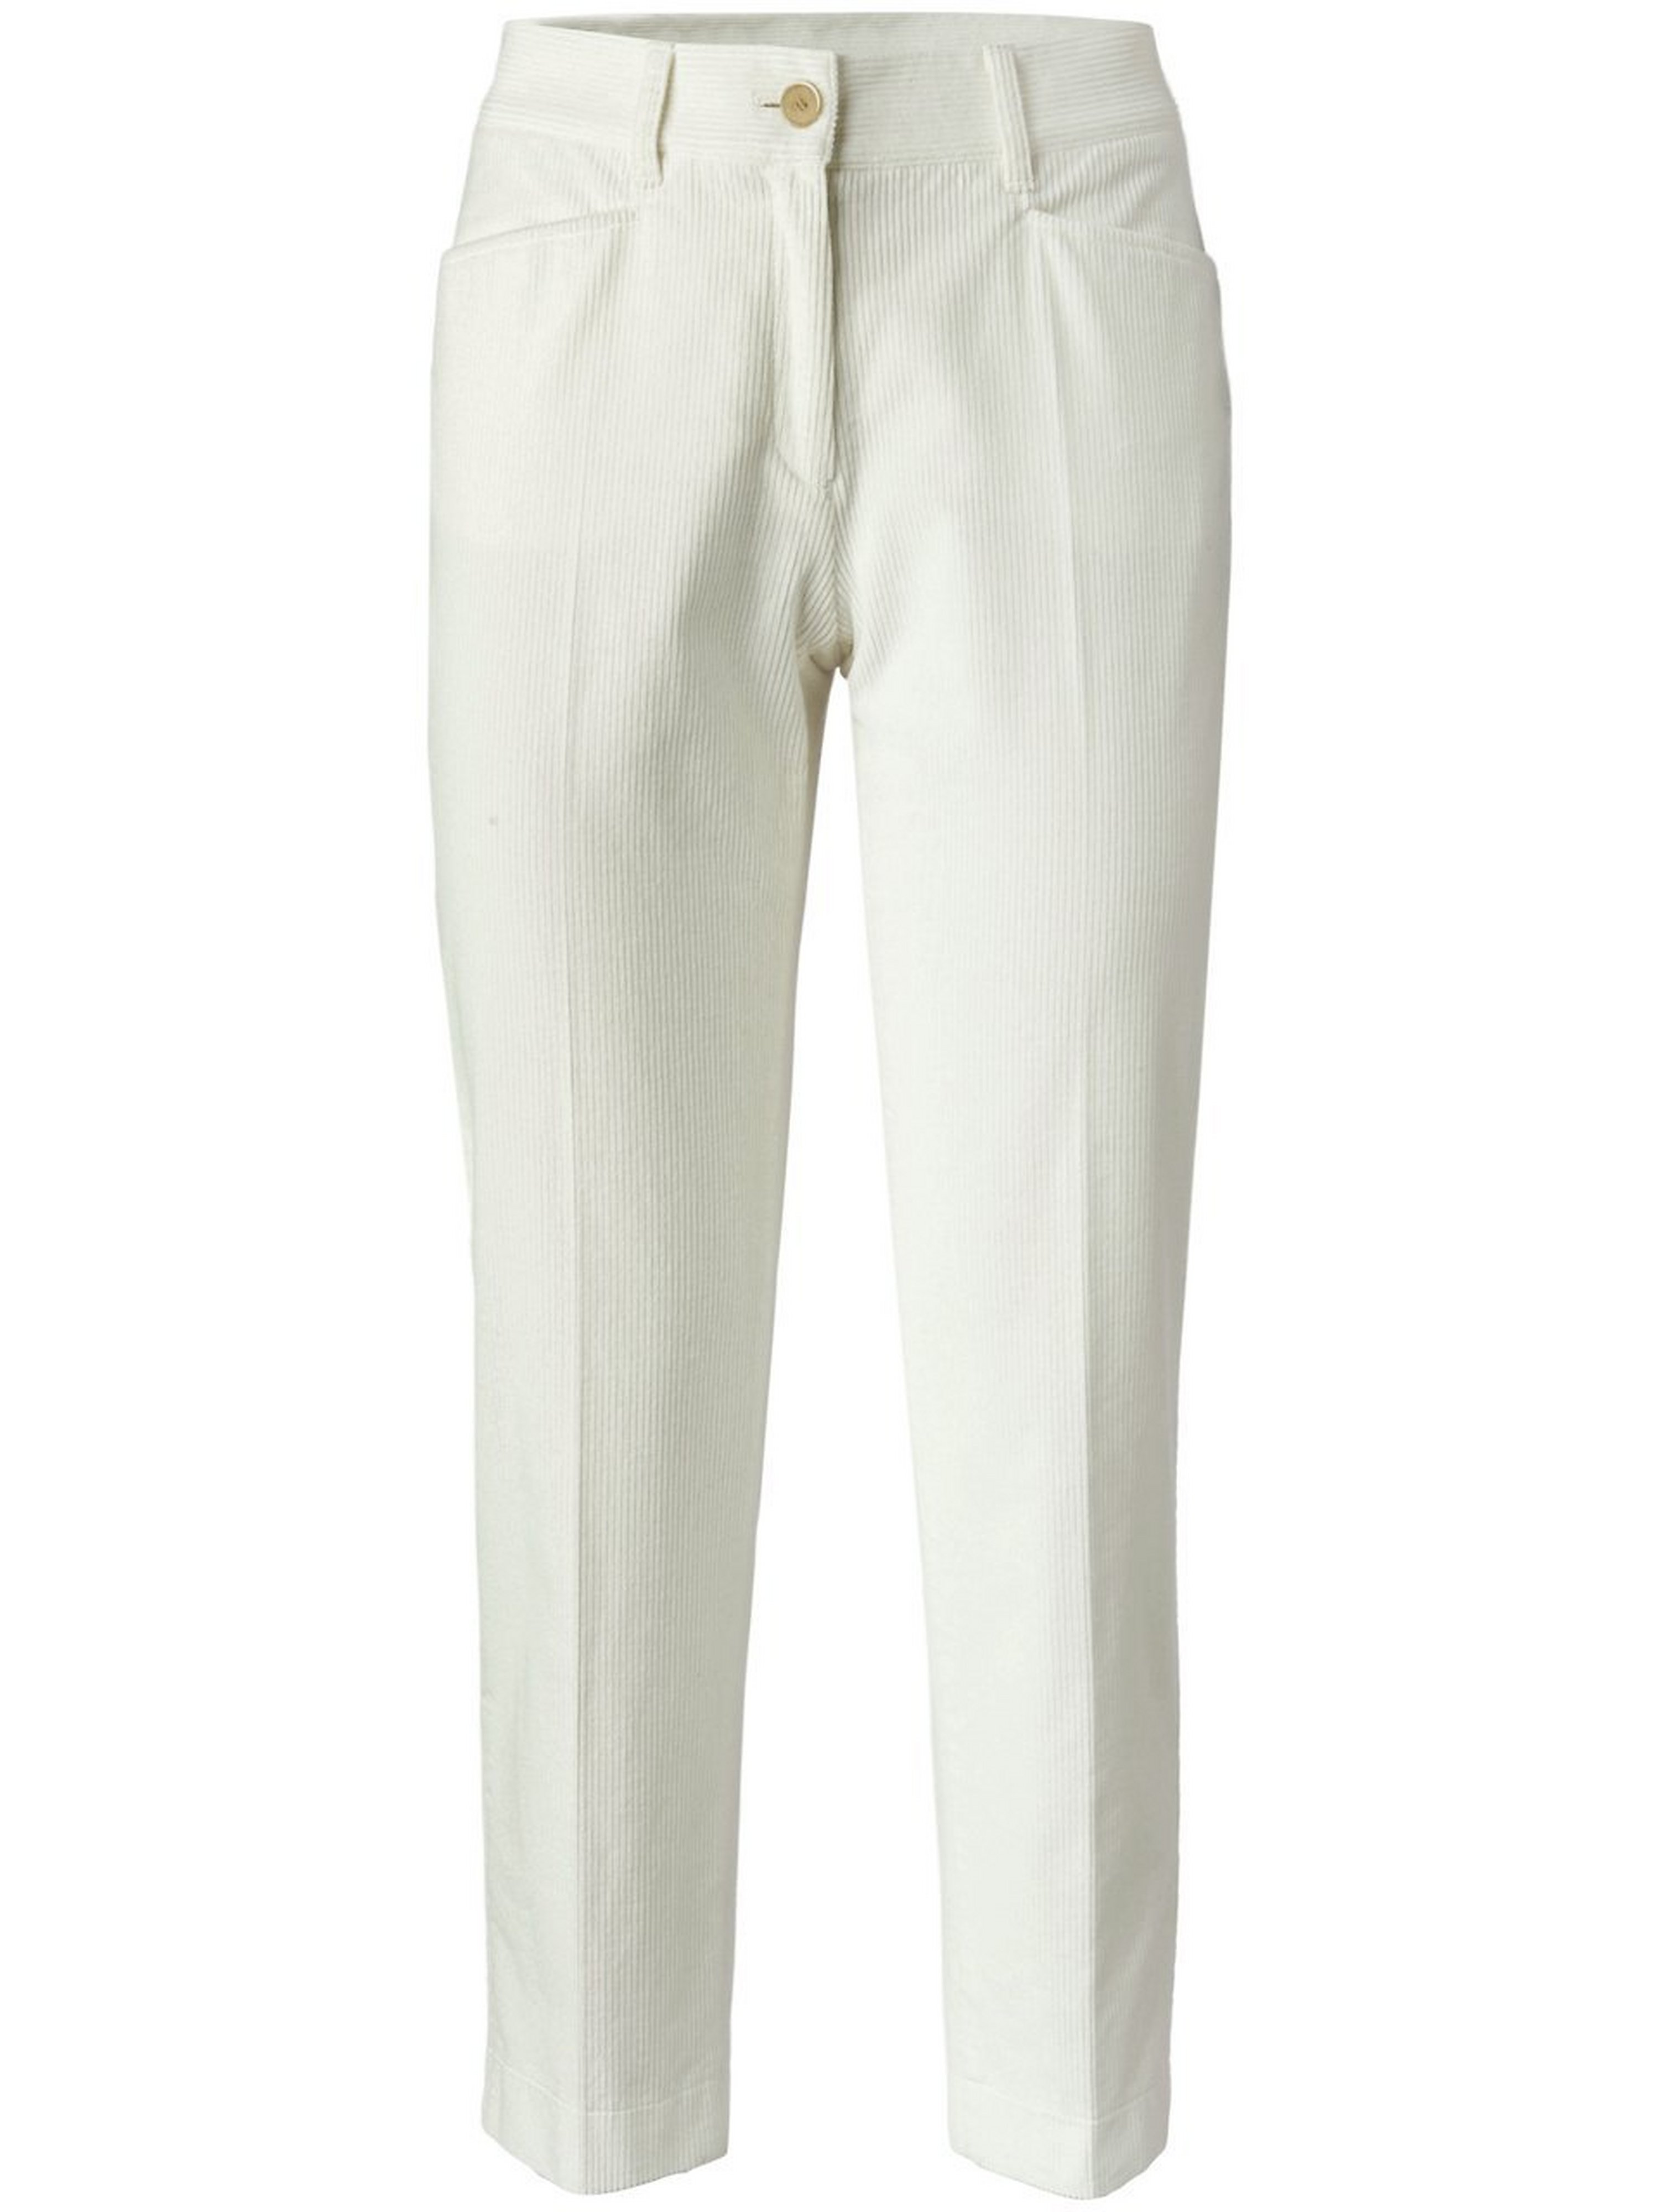 Le pantalon 7/8 slim Mara S en velours côtelé  Brax Feel Good blanc